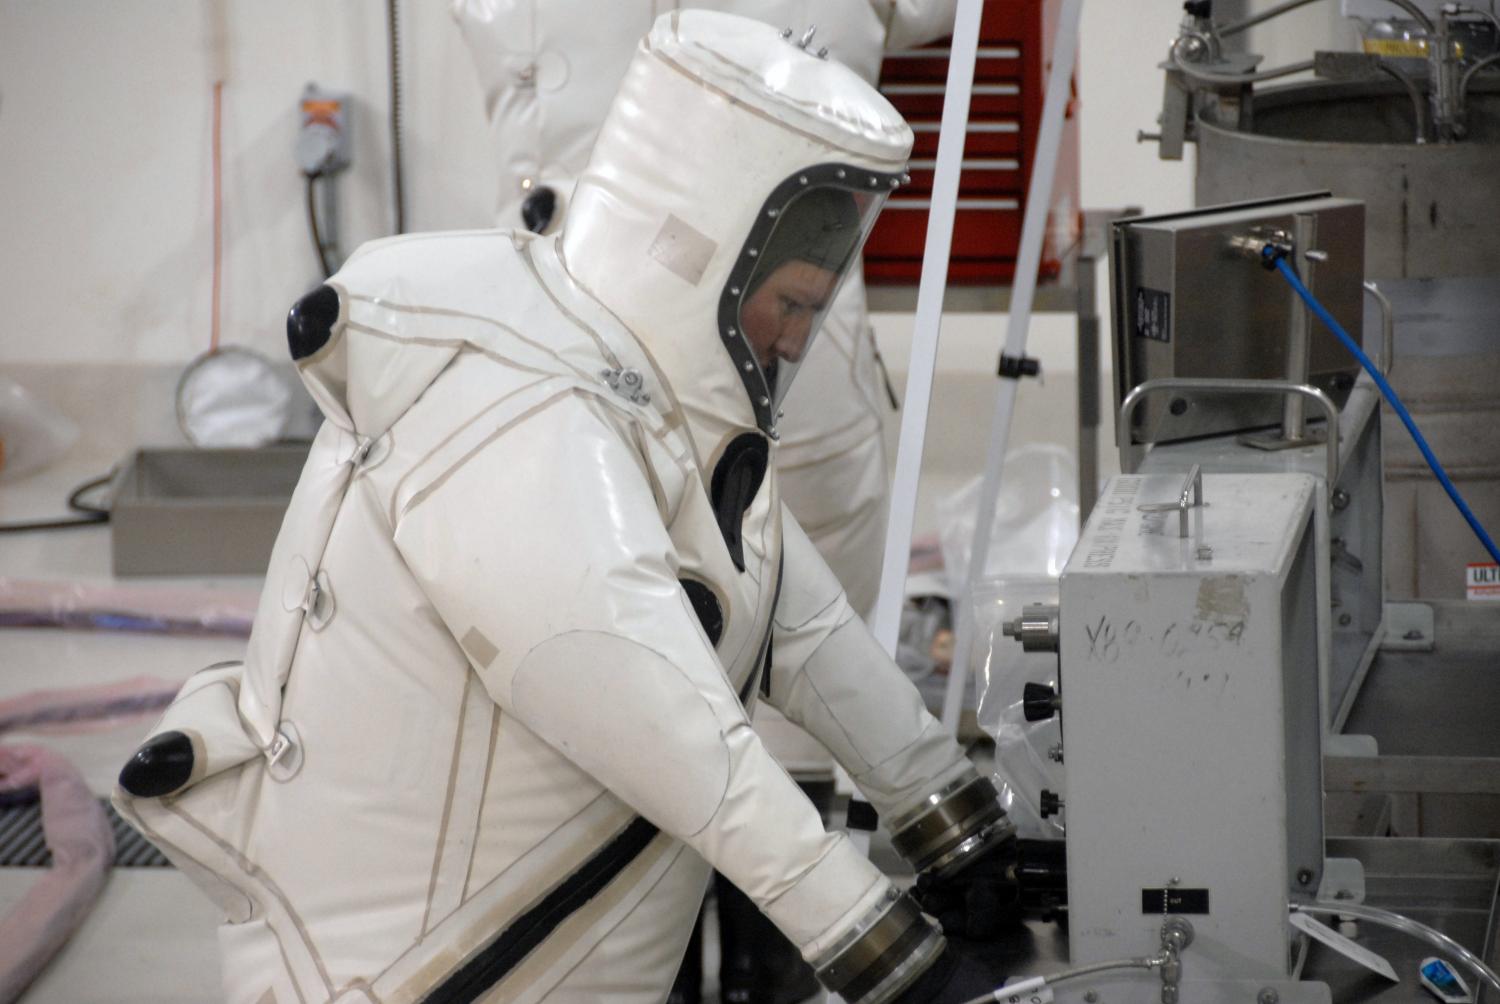 Scape Technician at panel
Photo: NASA